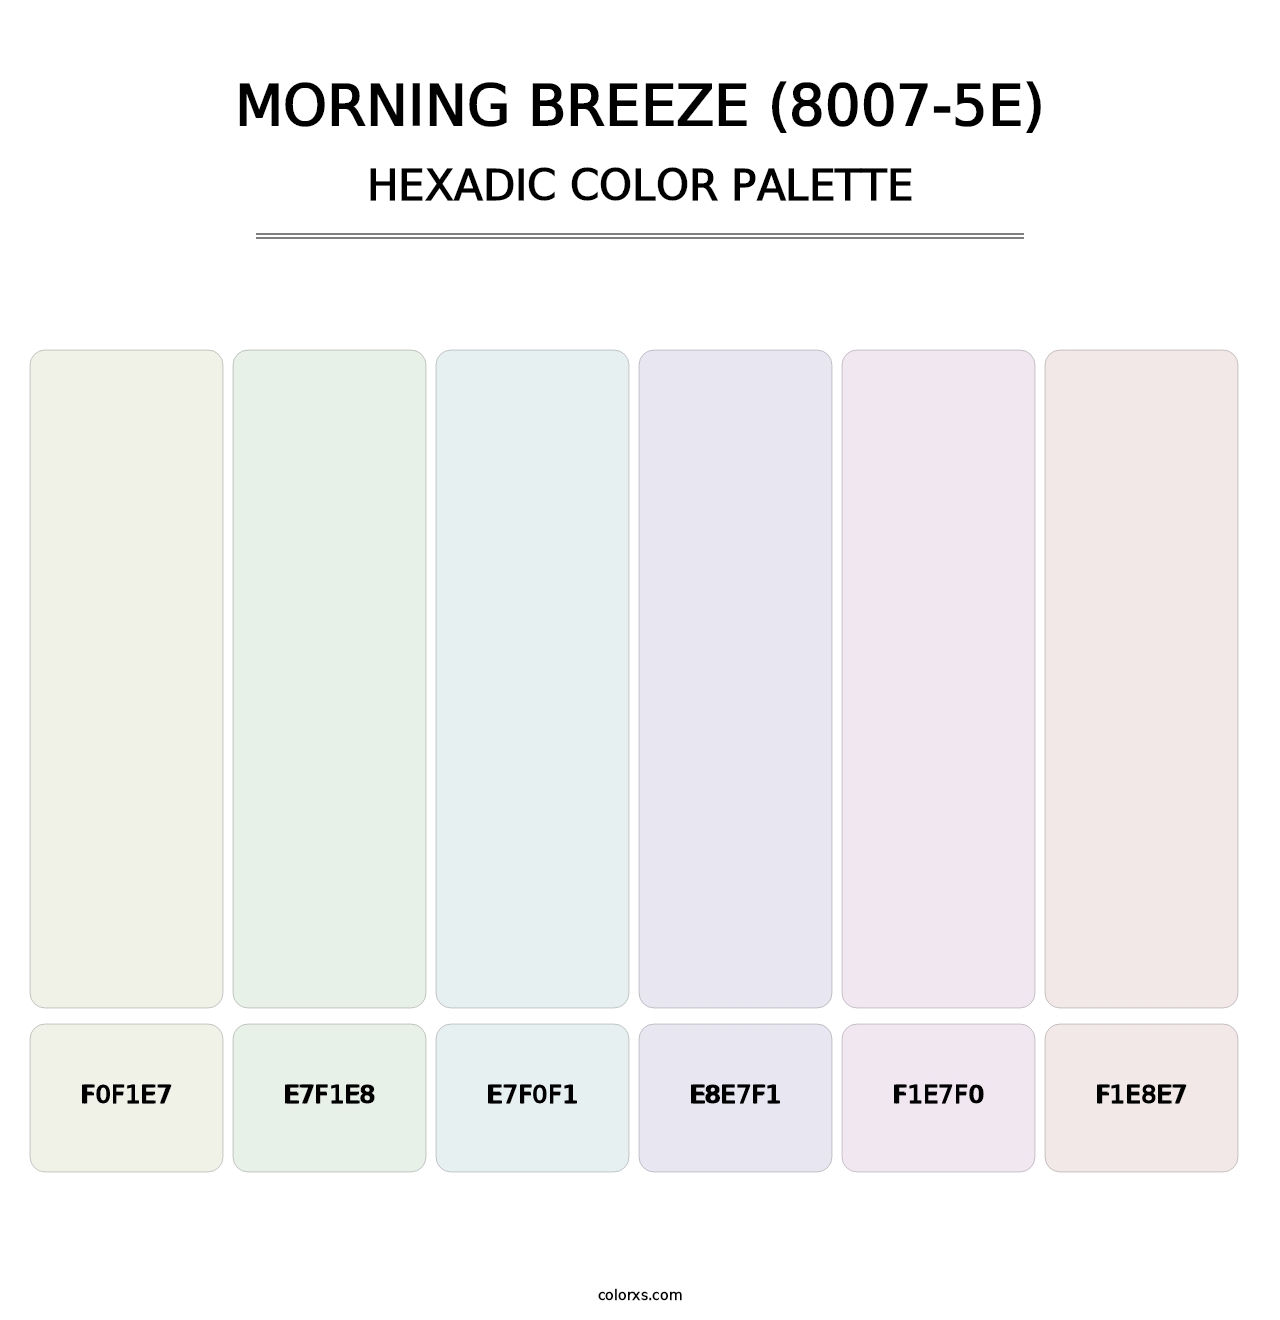 Morning Breeze (8007-5E) - Hexadic Color Palette